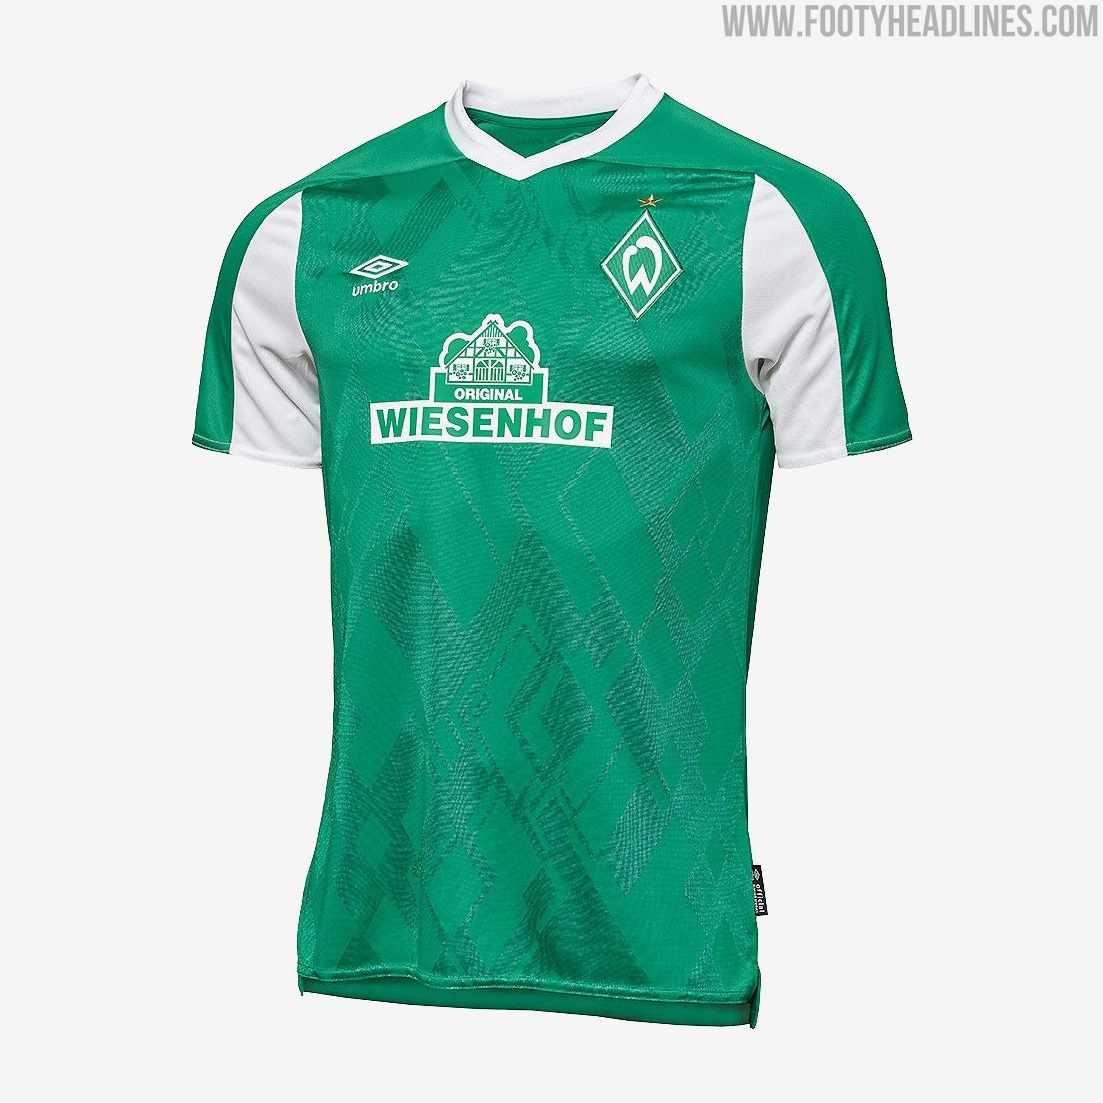 Werder Bremen 20-21 Home & Away Kits Released - Footy Headlines